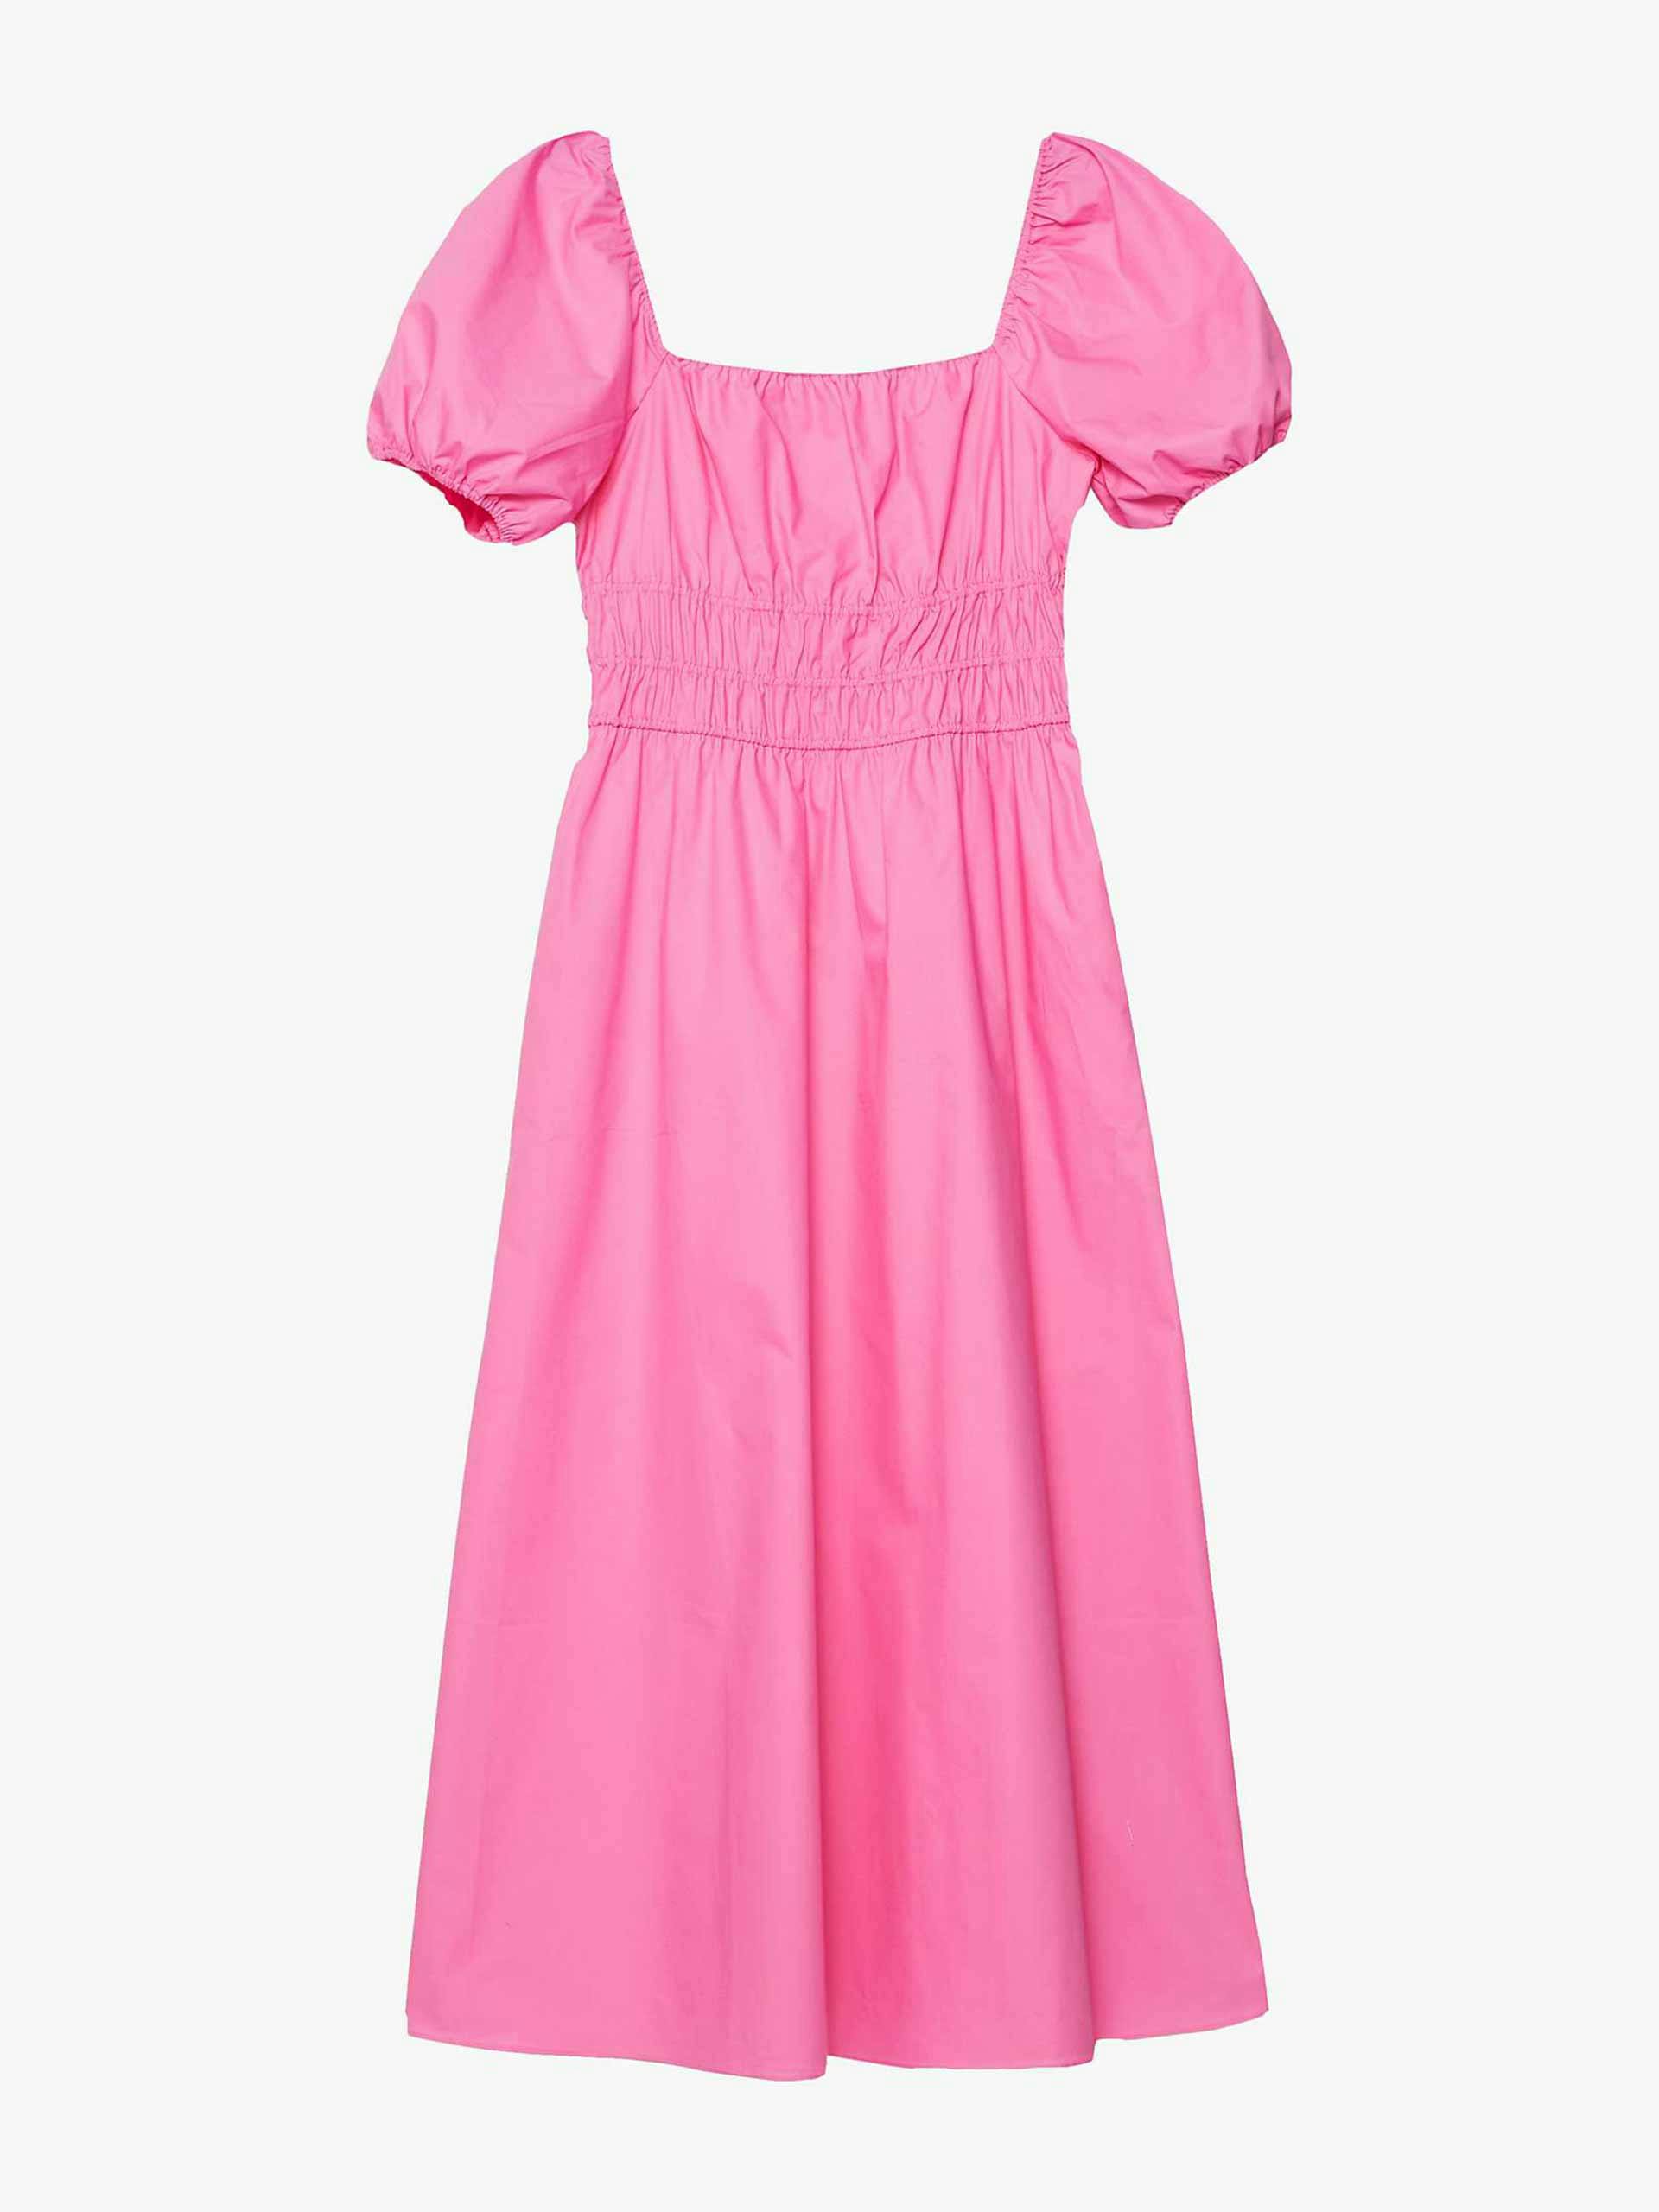 Bright pink cotton dress